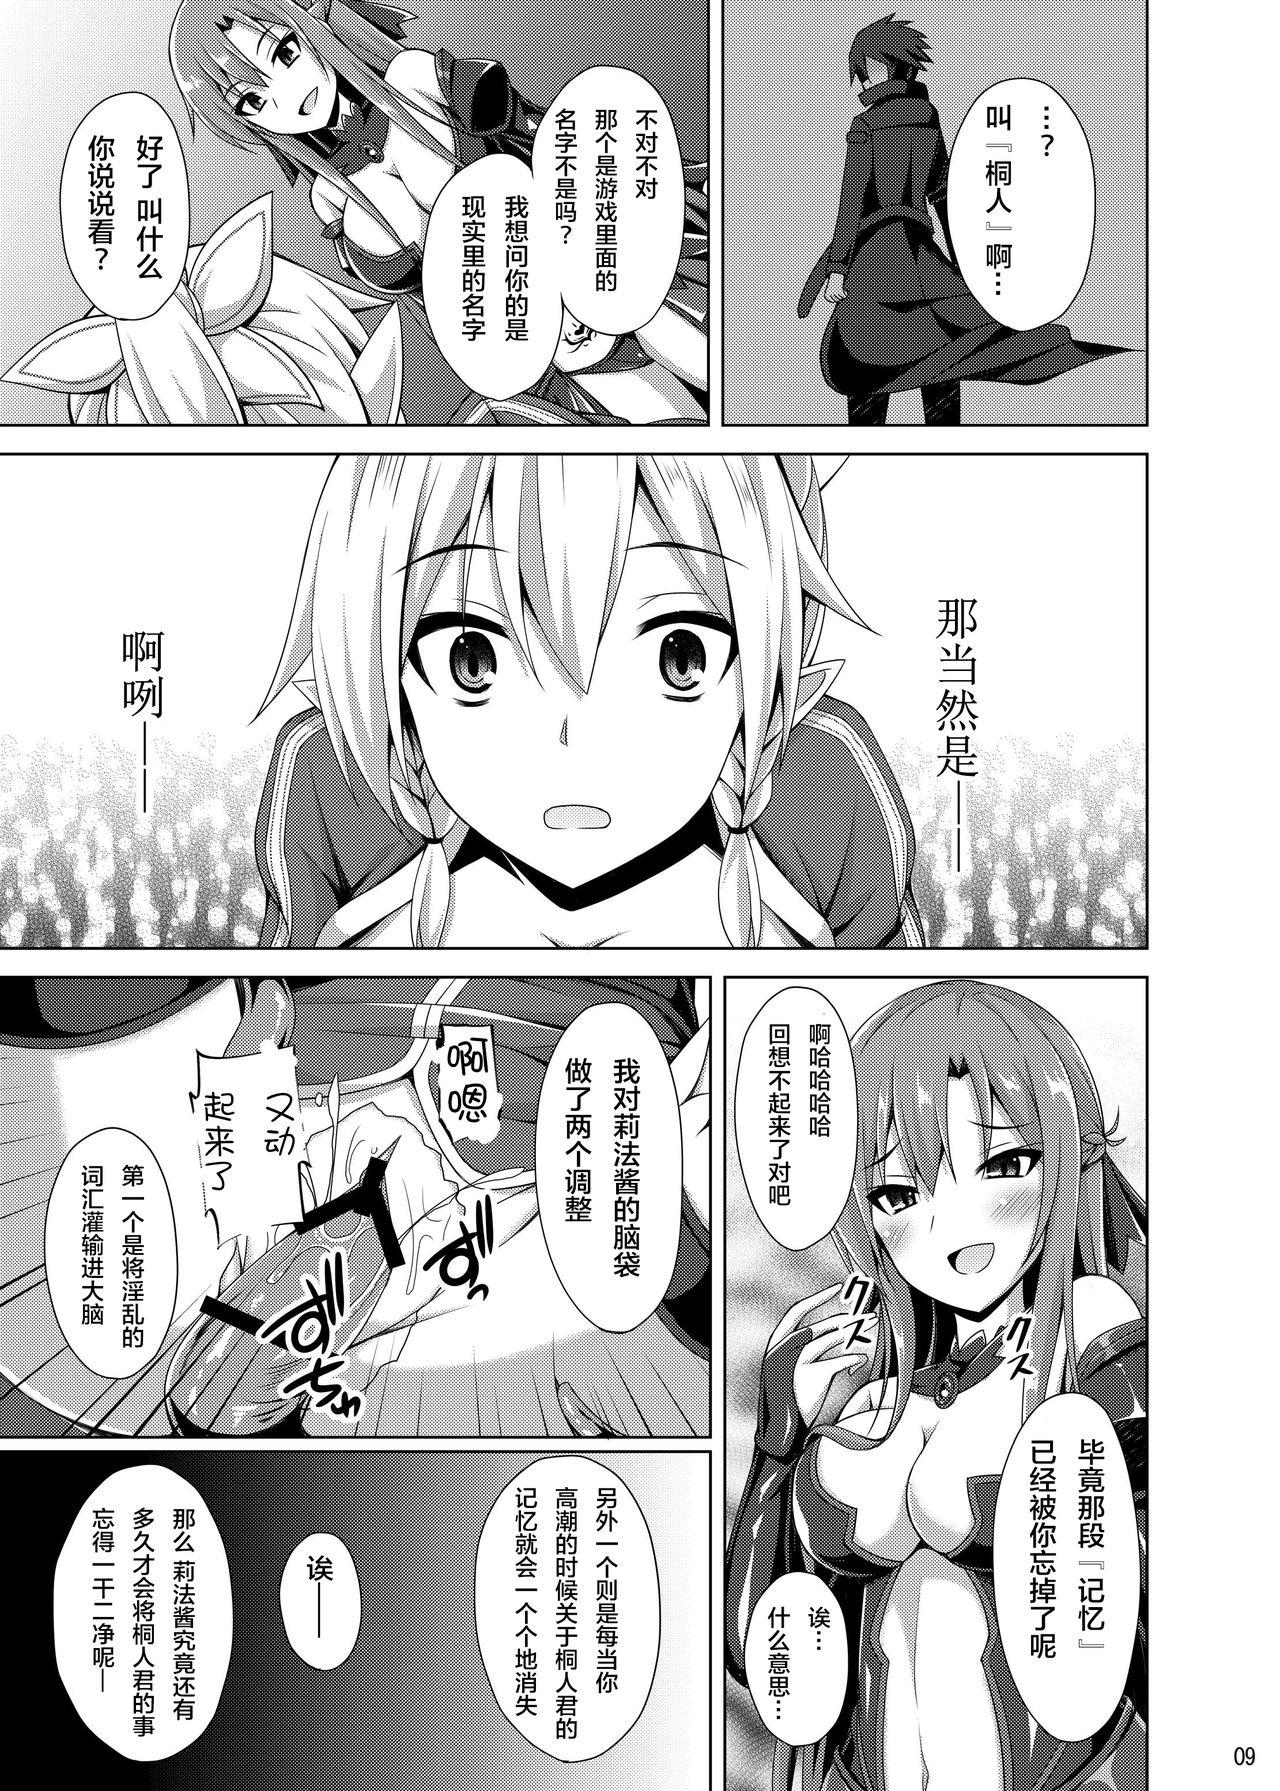 Suckingdick Kanojo wa Mou "Onii-chan" to wa Yonde Kurenai... - Sword art online Ass Lick - Page 8